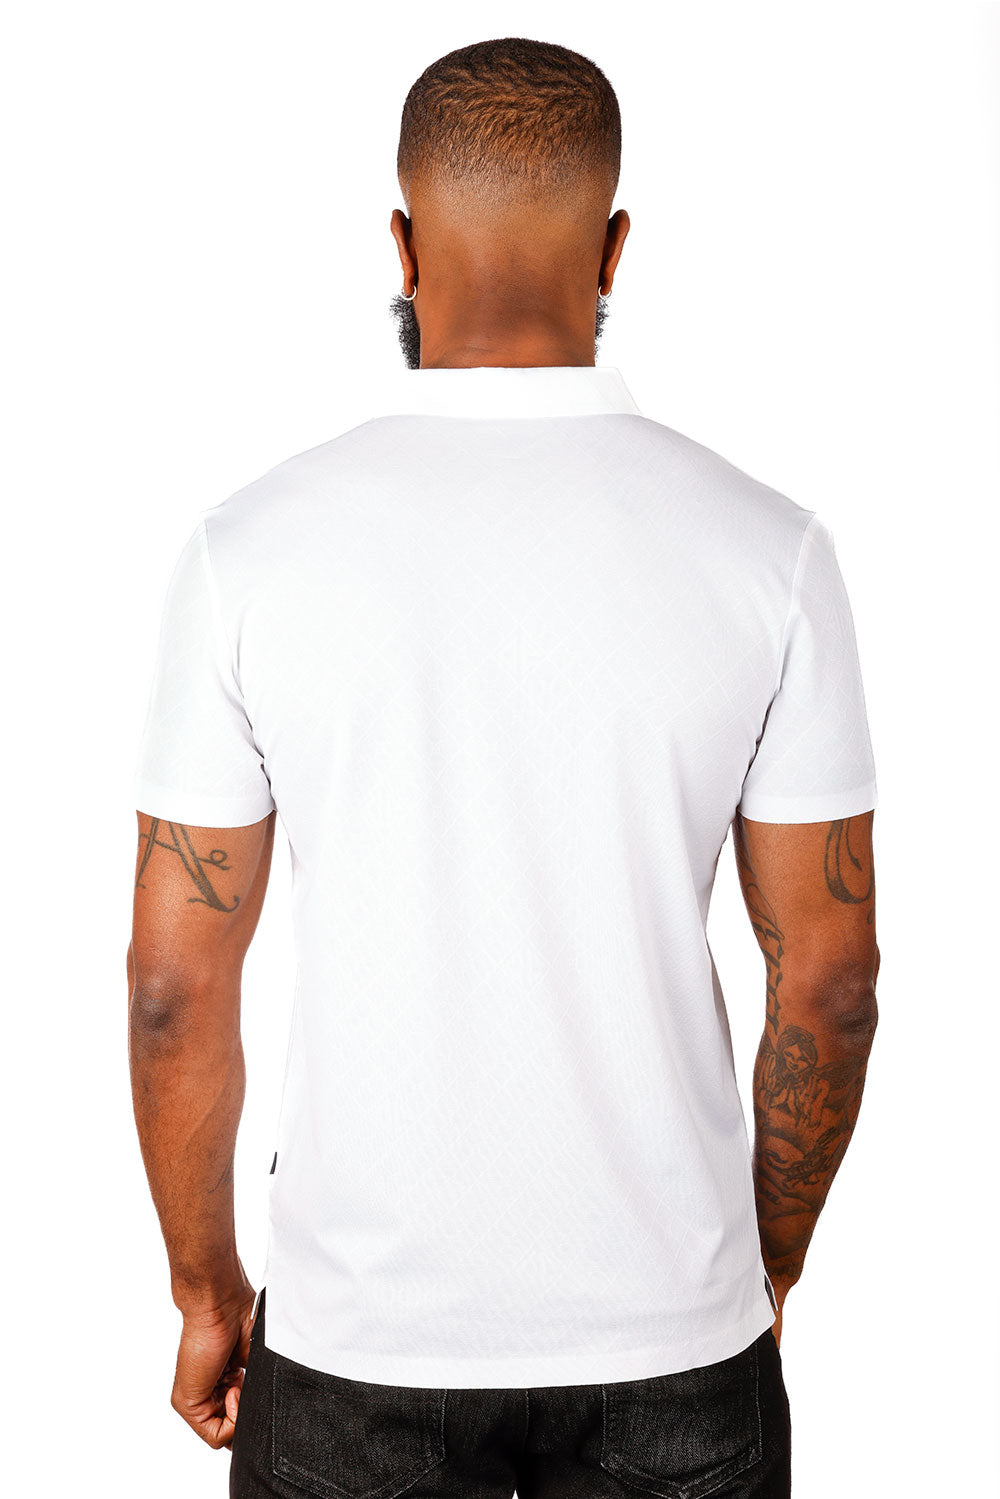 Barabas Men's Premium Solid Diamond Polo Short Sleeve Shirts 3P07 White